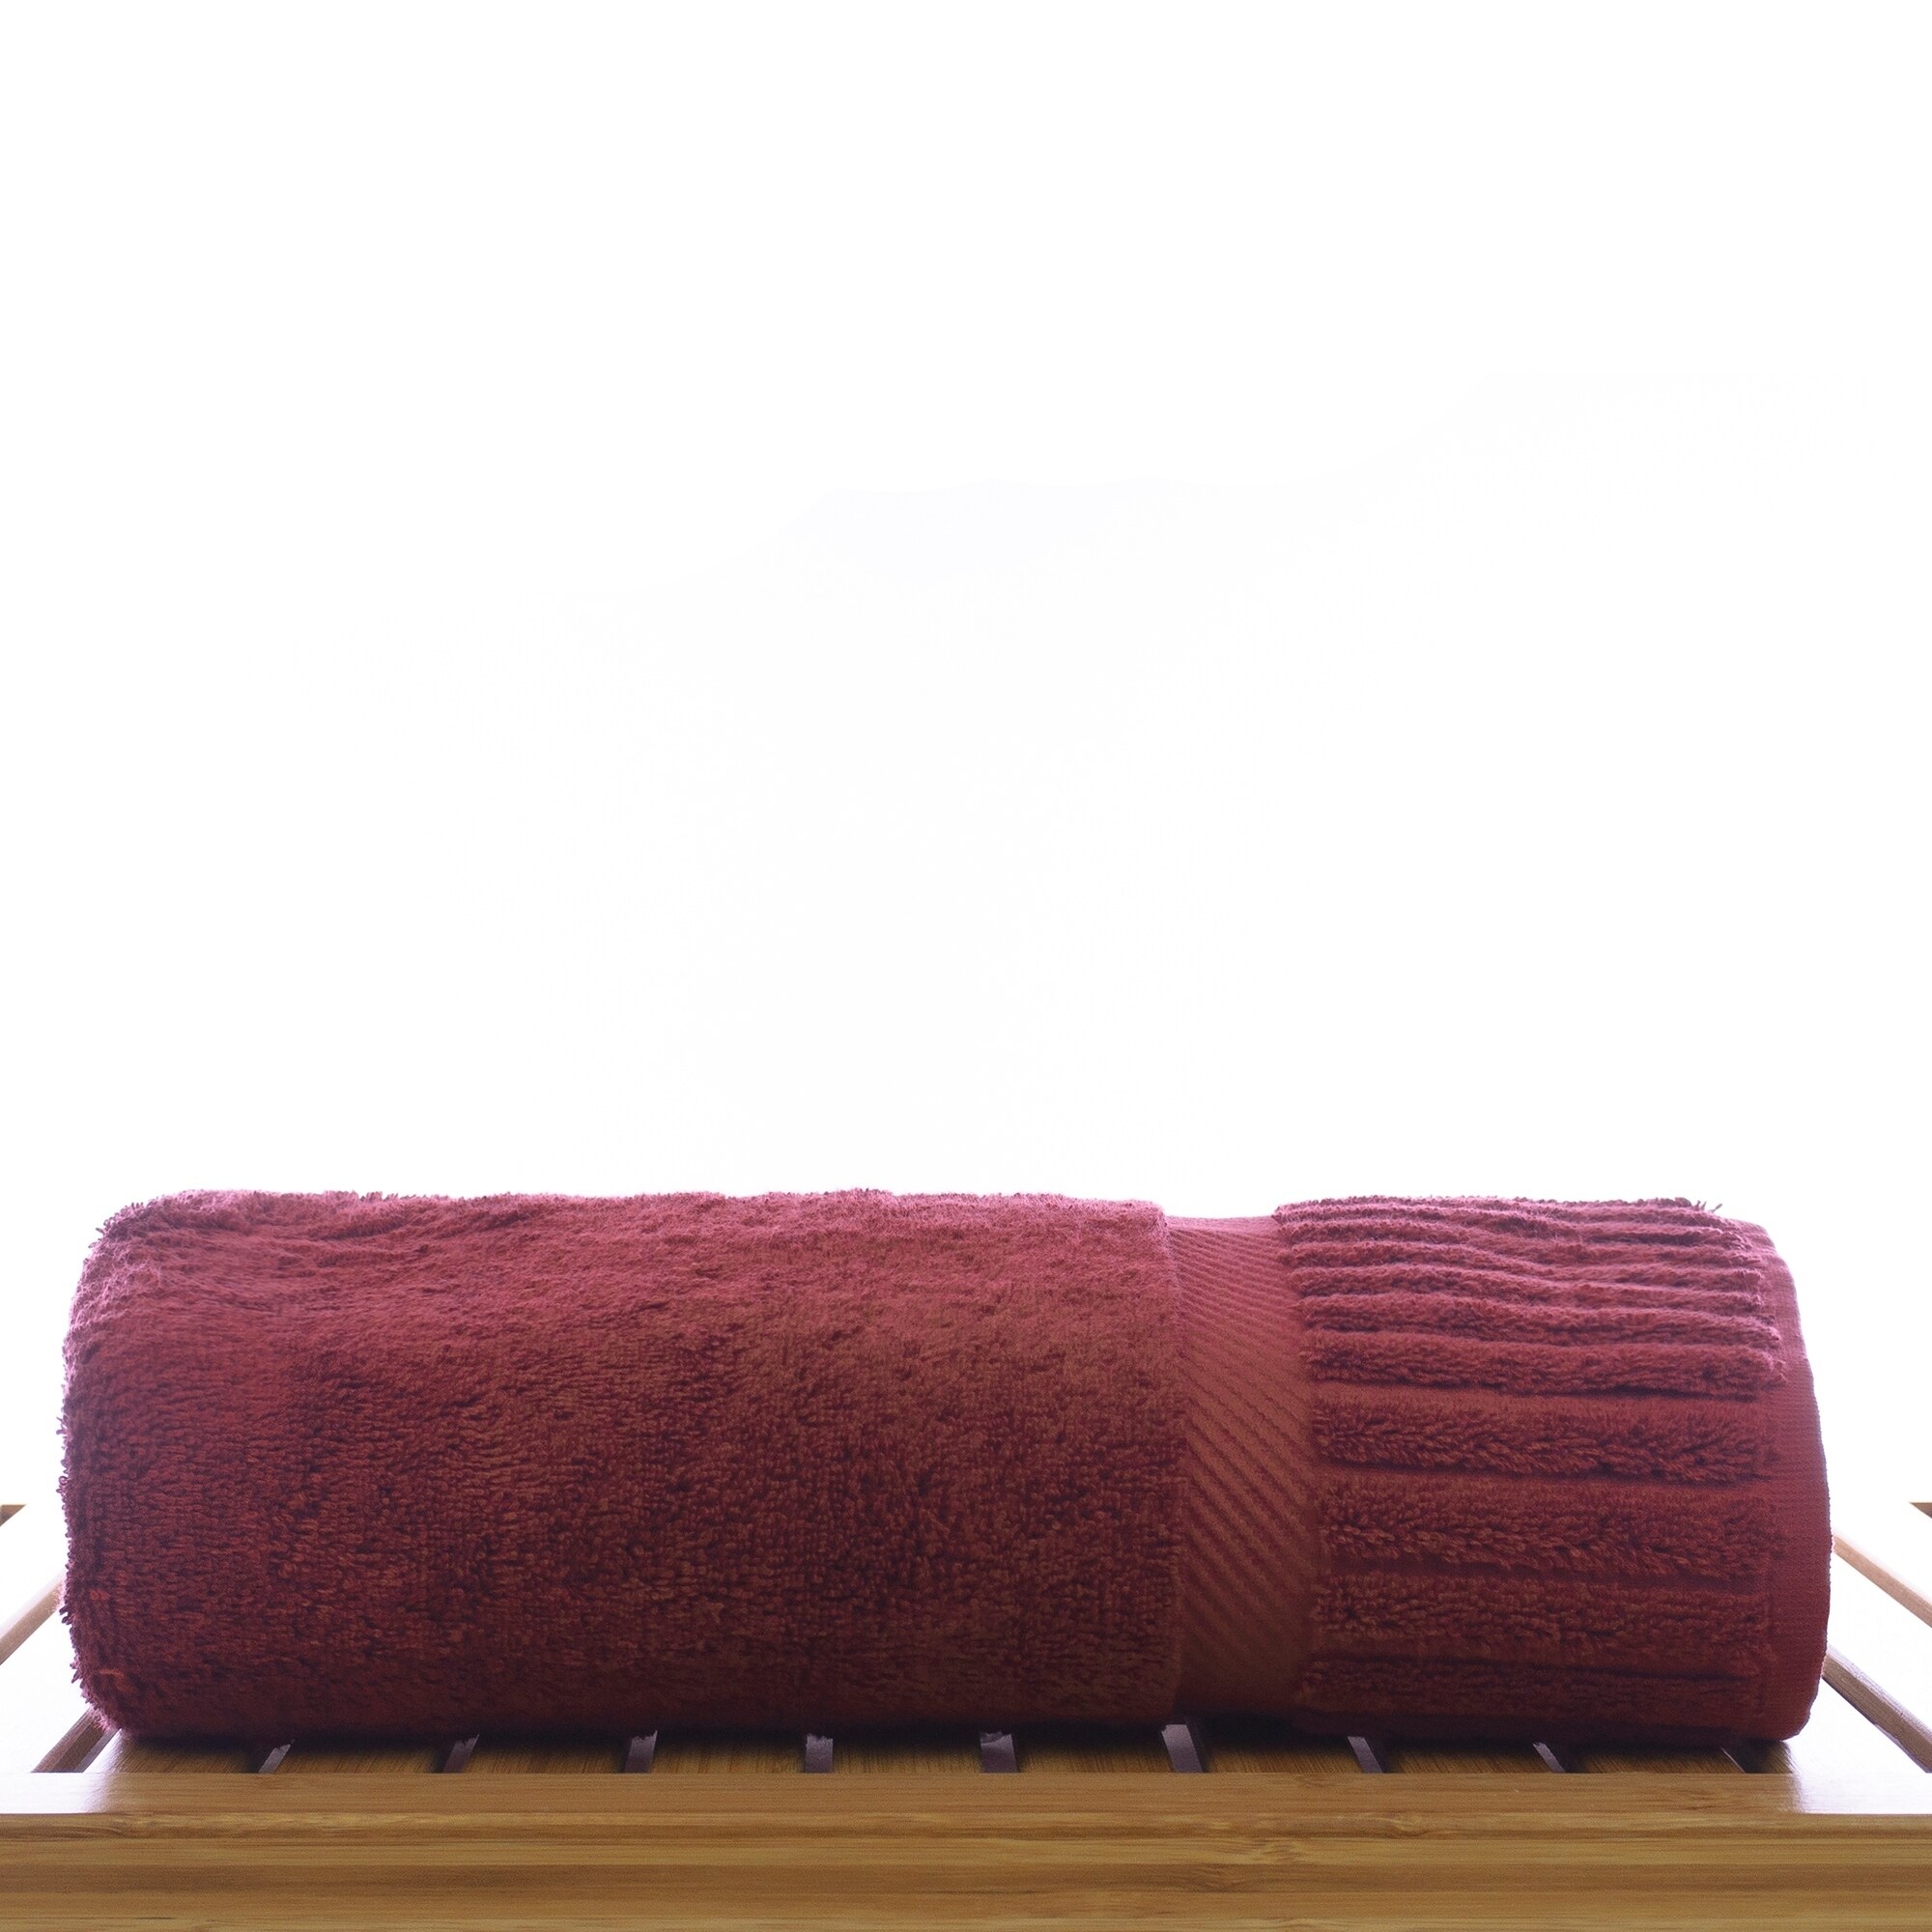 Luxury Hotel and Spa 100-percent Genuine Turkish Cotton Bath Towels Piano  Key (Set of 4) - Bed Bath & Beyond - 10102607